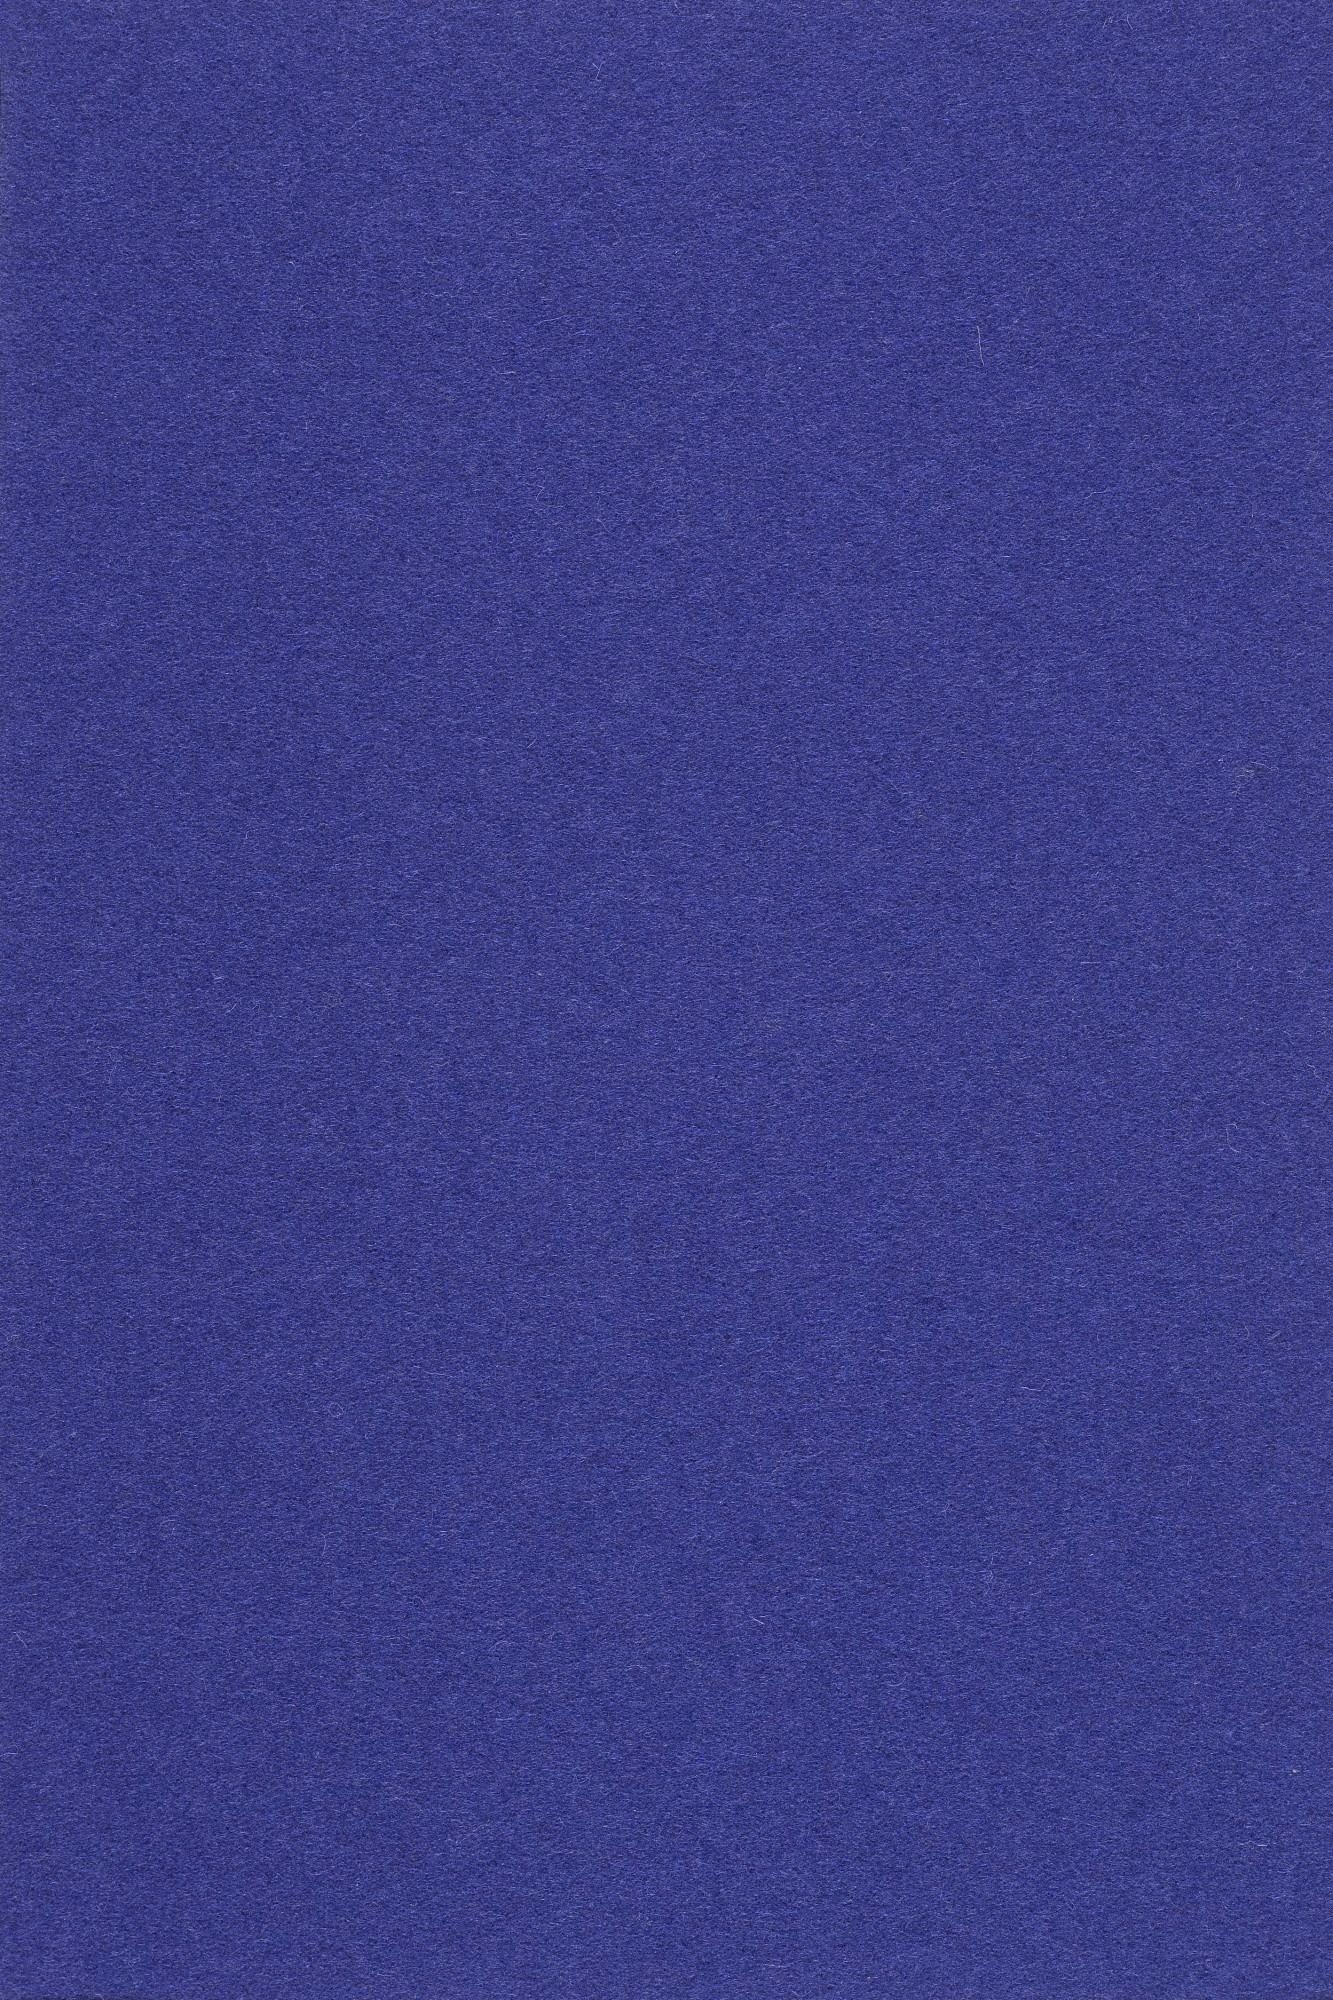 Fabric sample Divina 3 684 blue